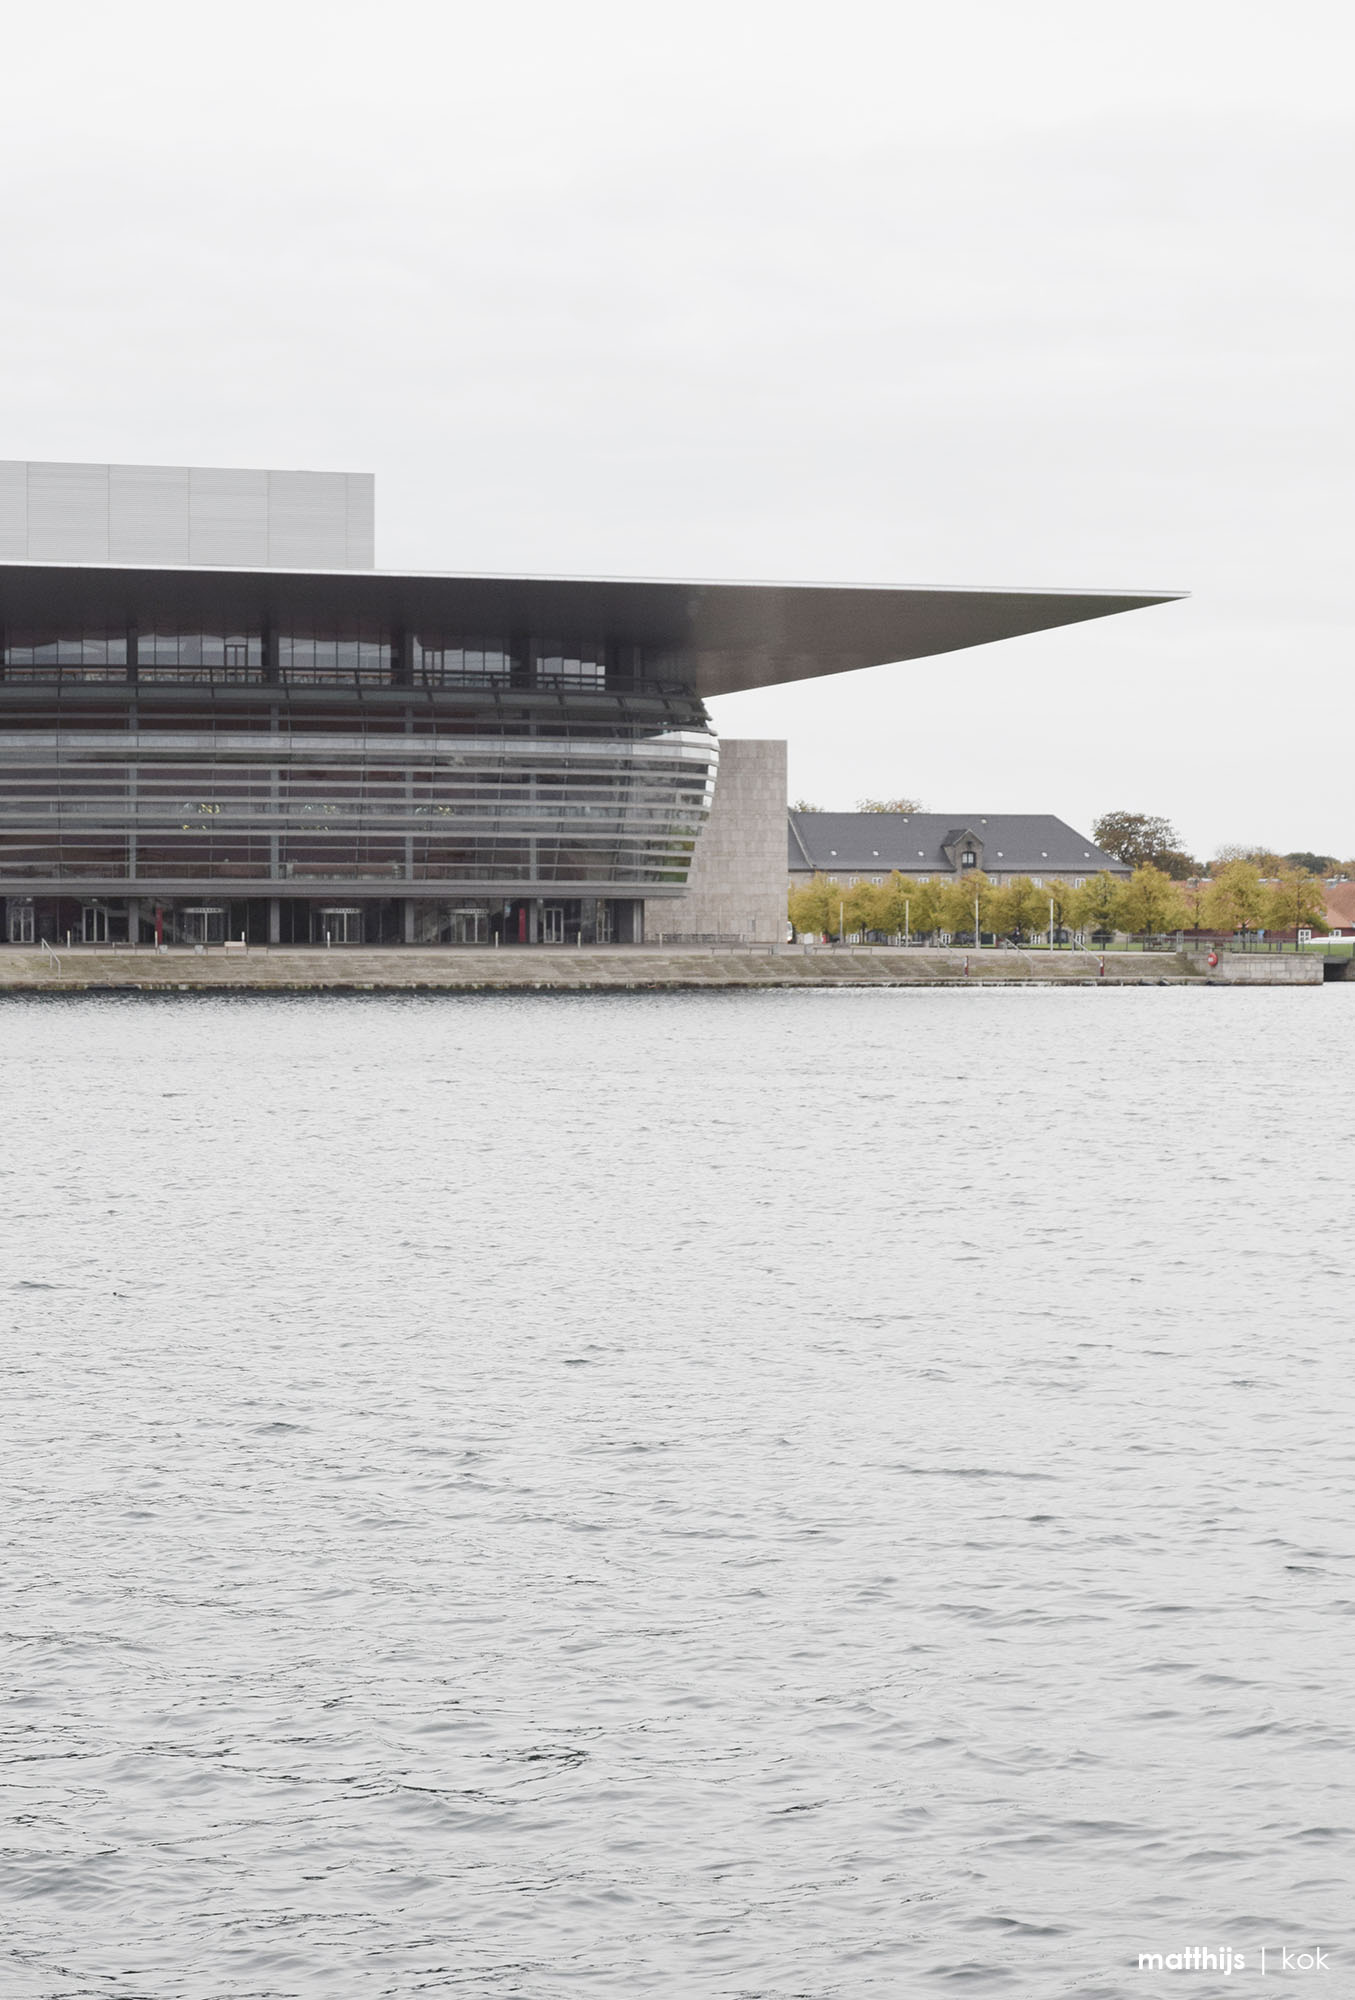 Copenhagen Opera House, Denmark | Photo by Matthijs Kok